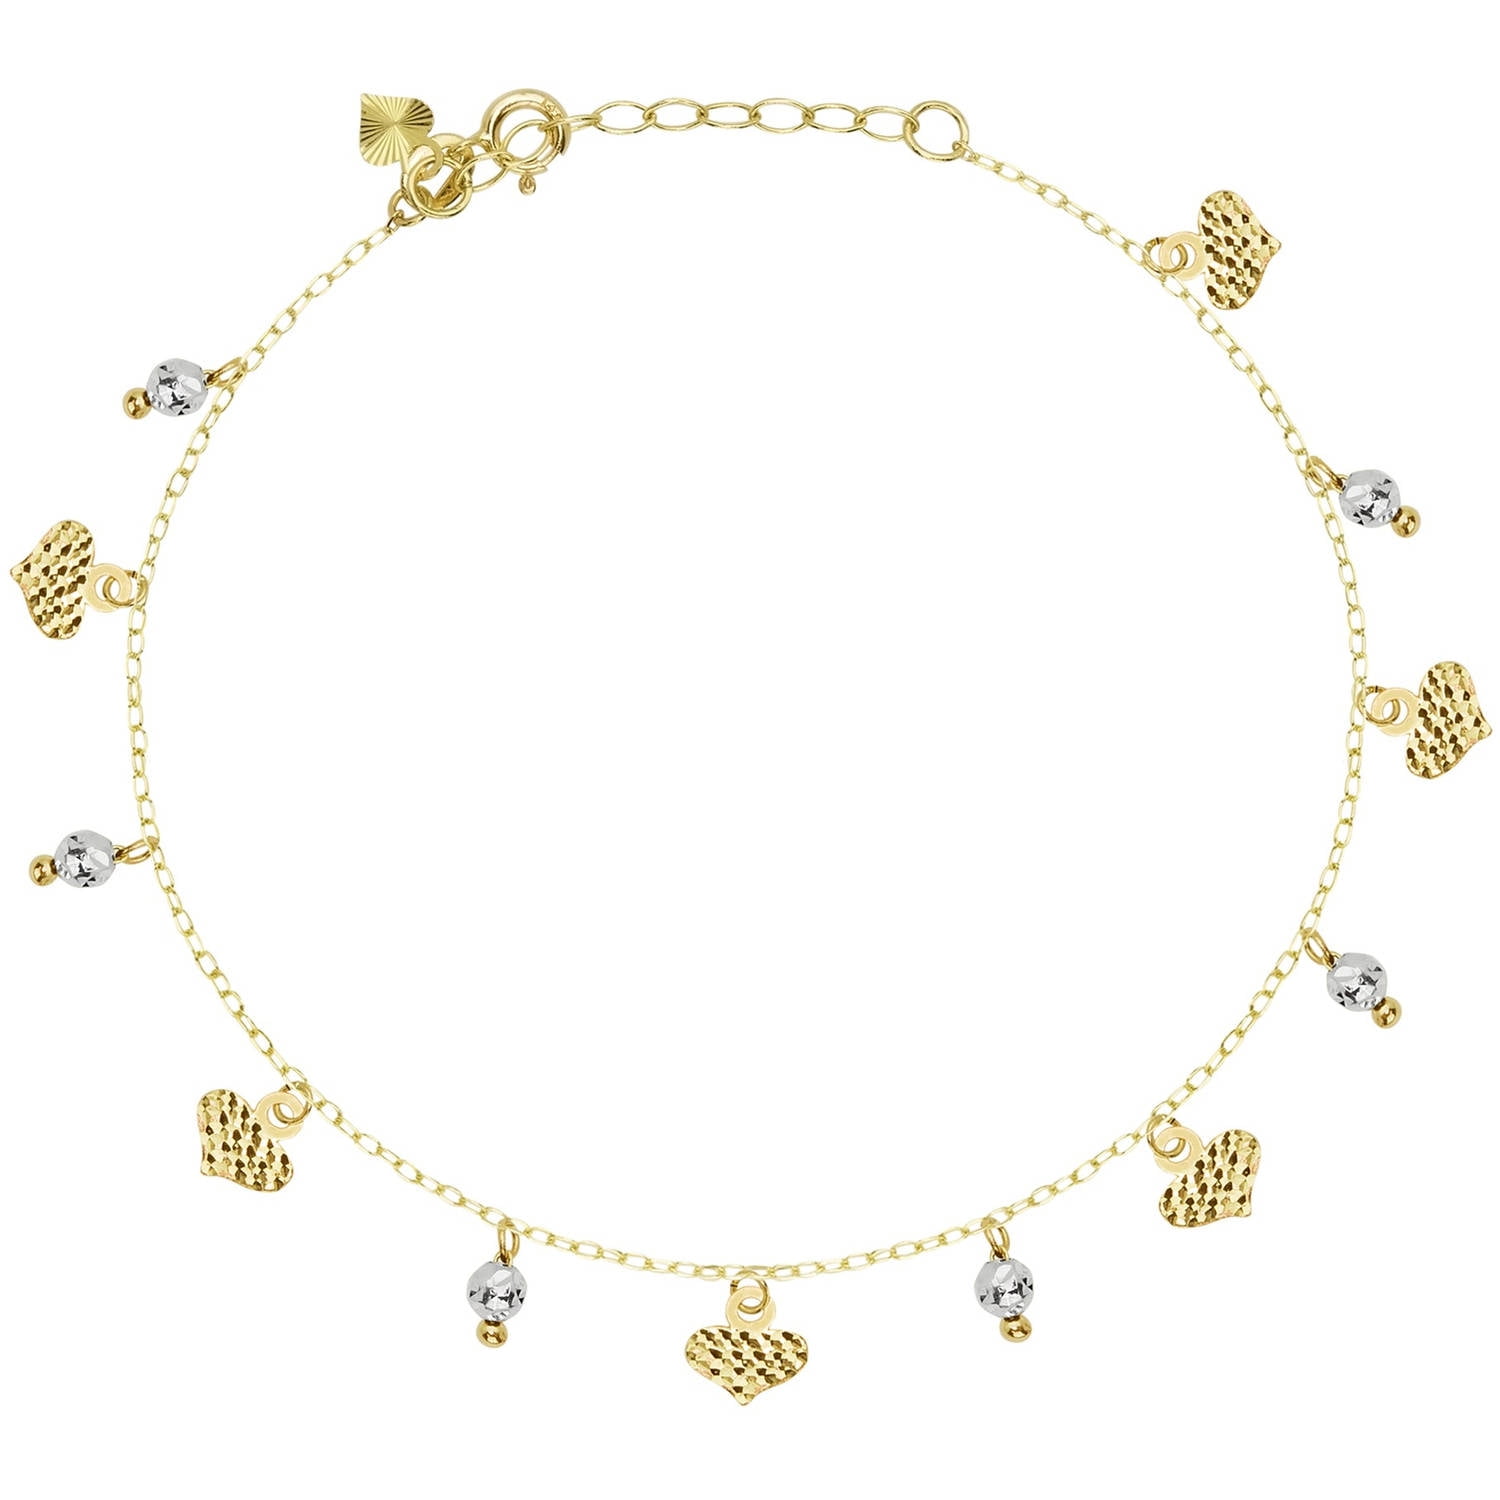 American Designs 14kt Yellow & White Gold Two-Tone Diamond-Cut Heart, Bead/Ball, Two-Tone Charm Dangle Bracelet 7"-8" Chain Adjustable